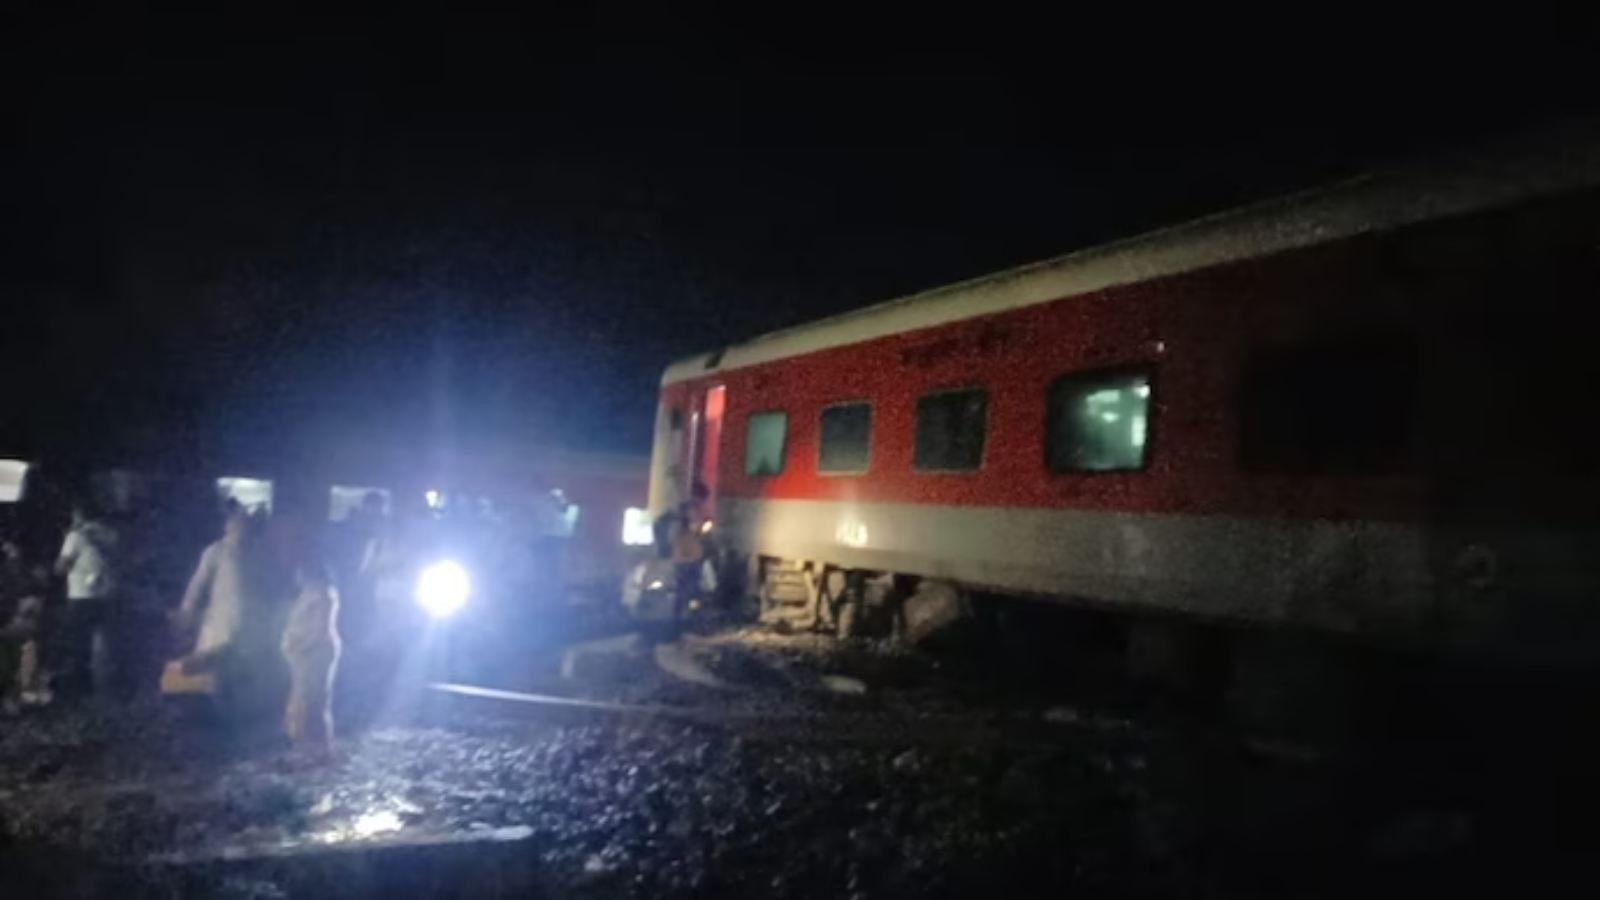 Bihar train accident: Helpline numbers and latest updates